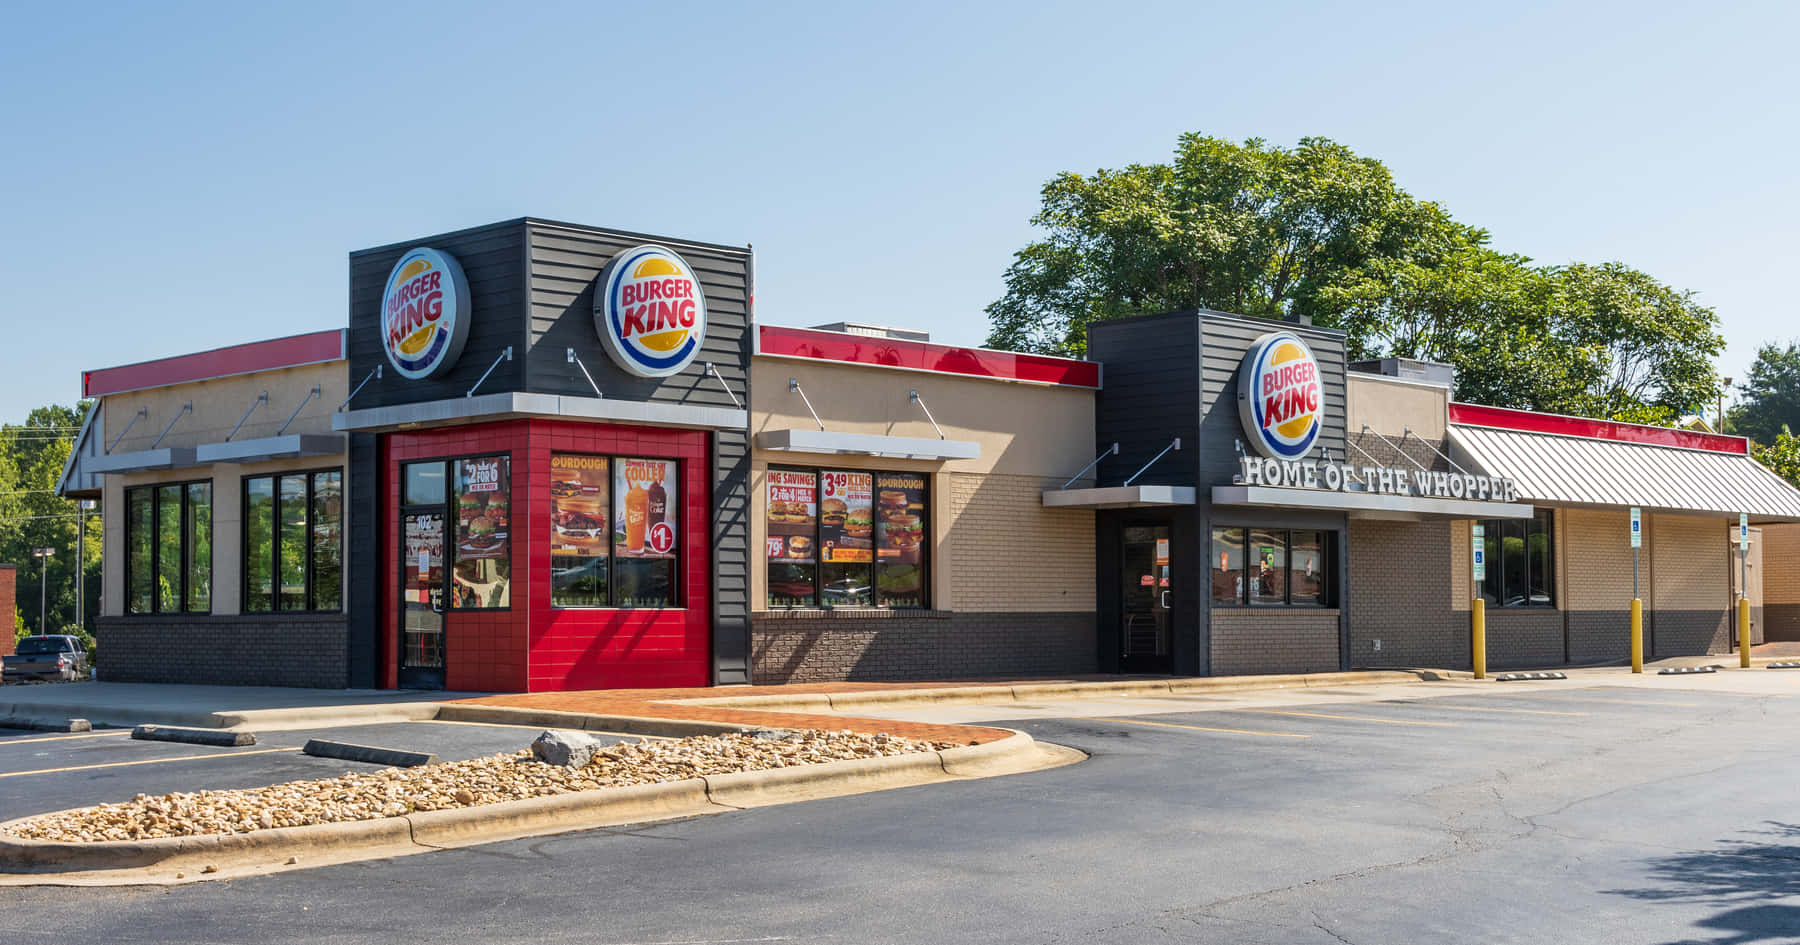 Satisfy Your Cravings at Burger King